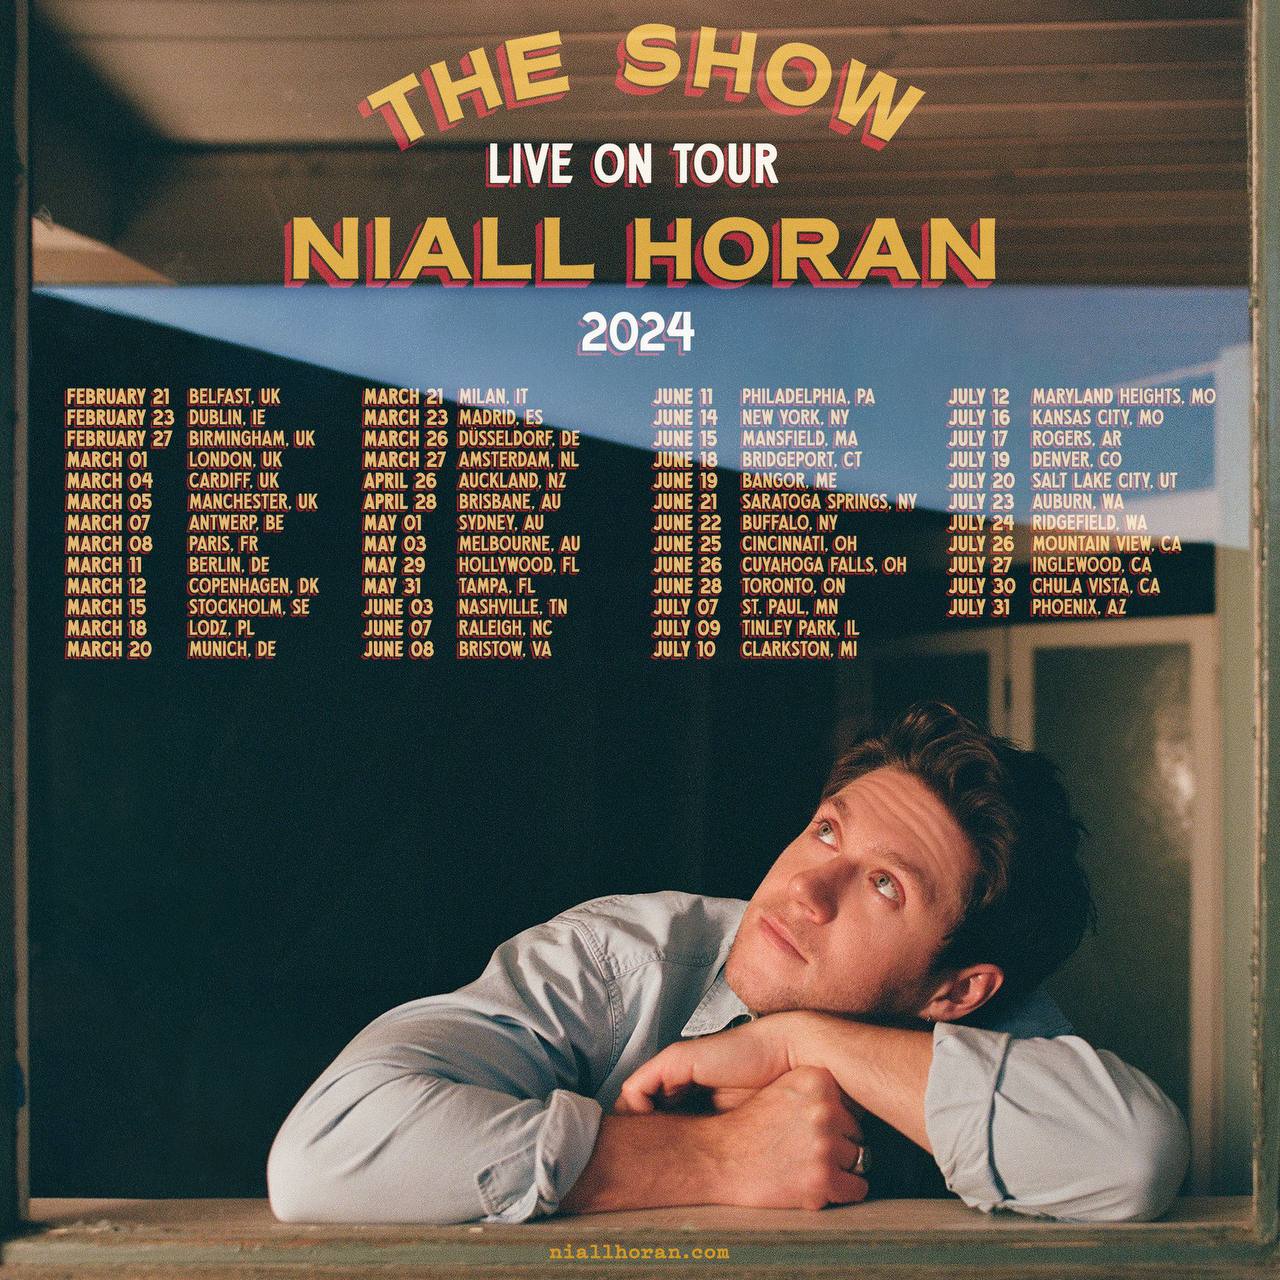 Niall horan world tour